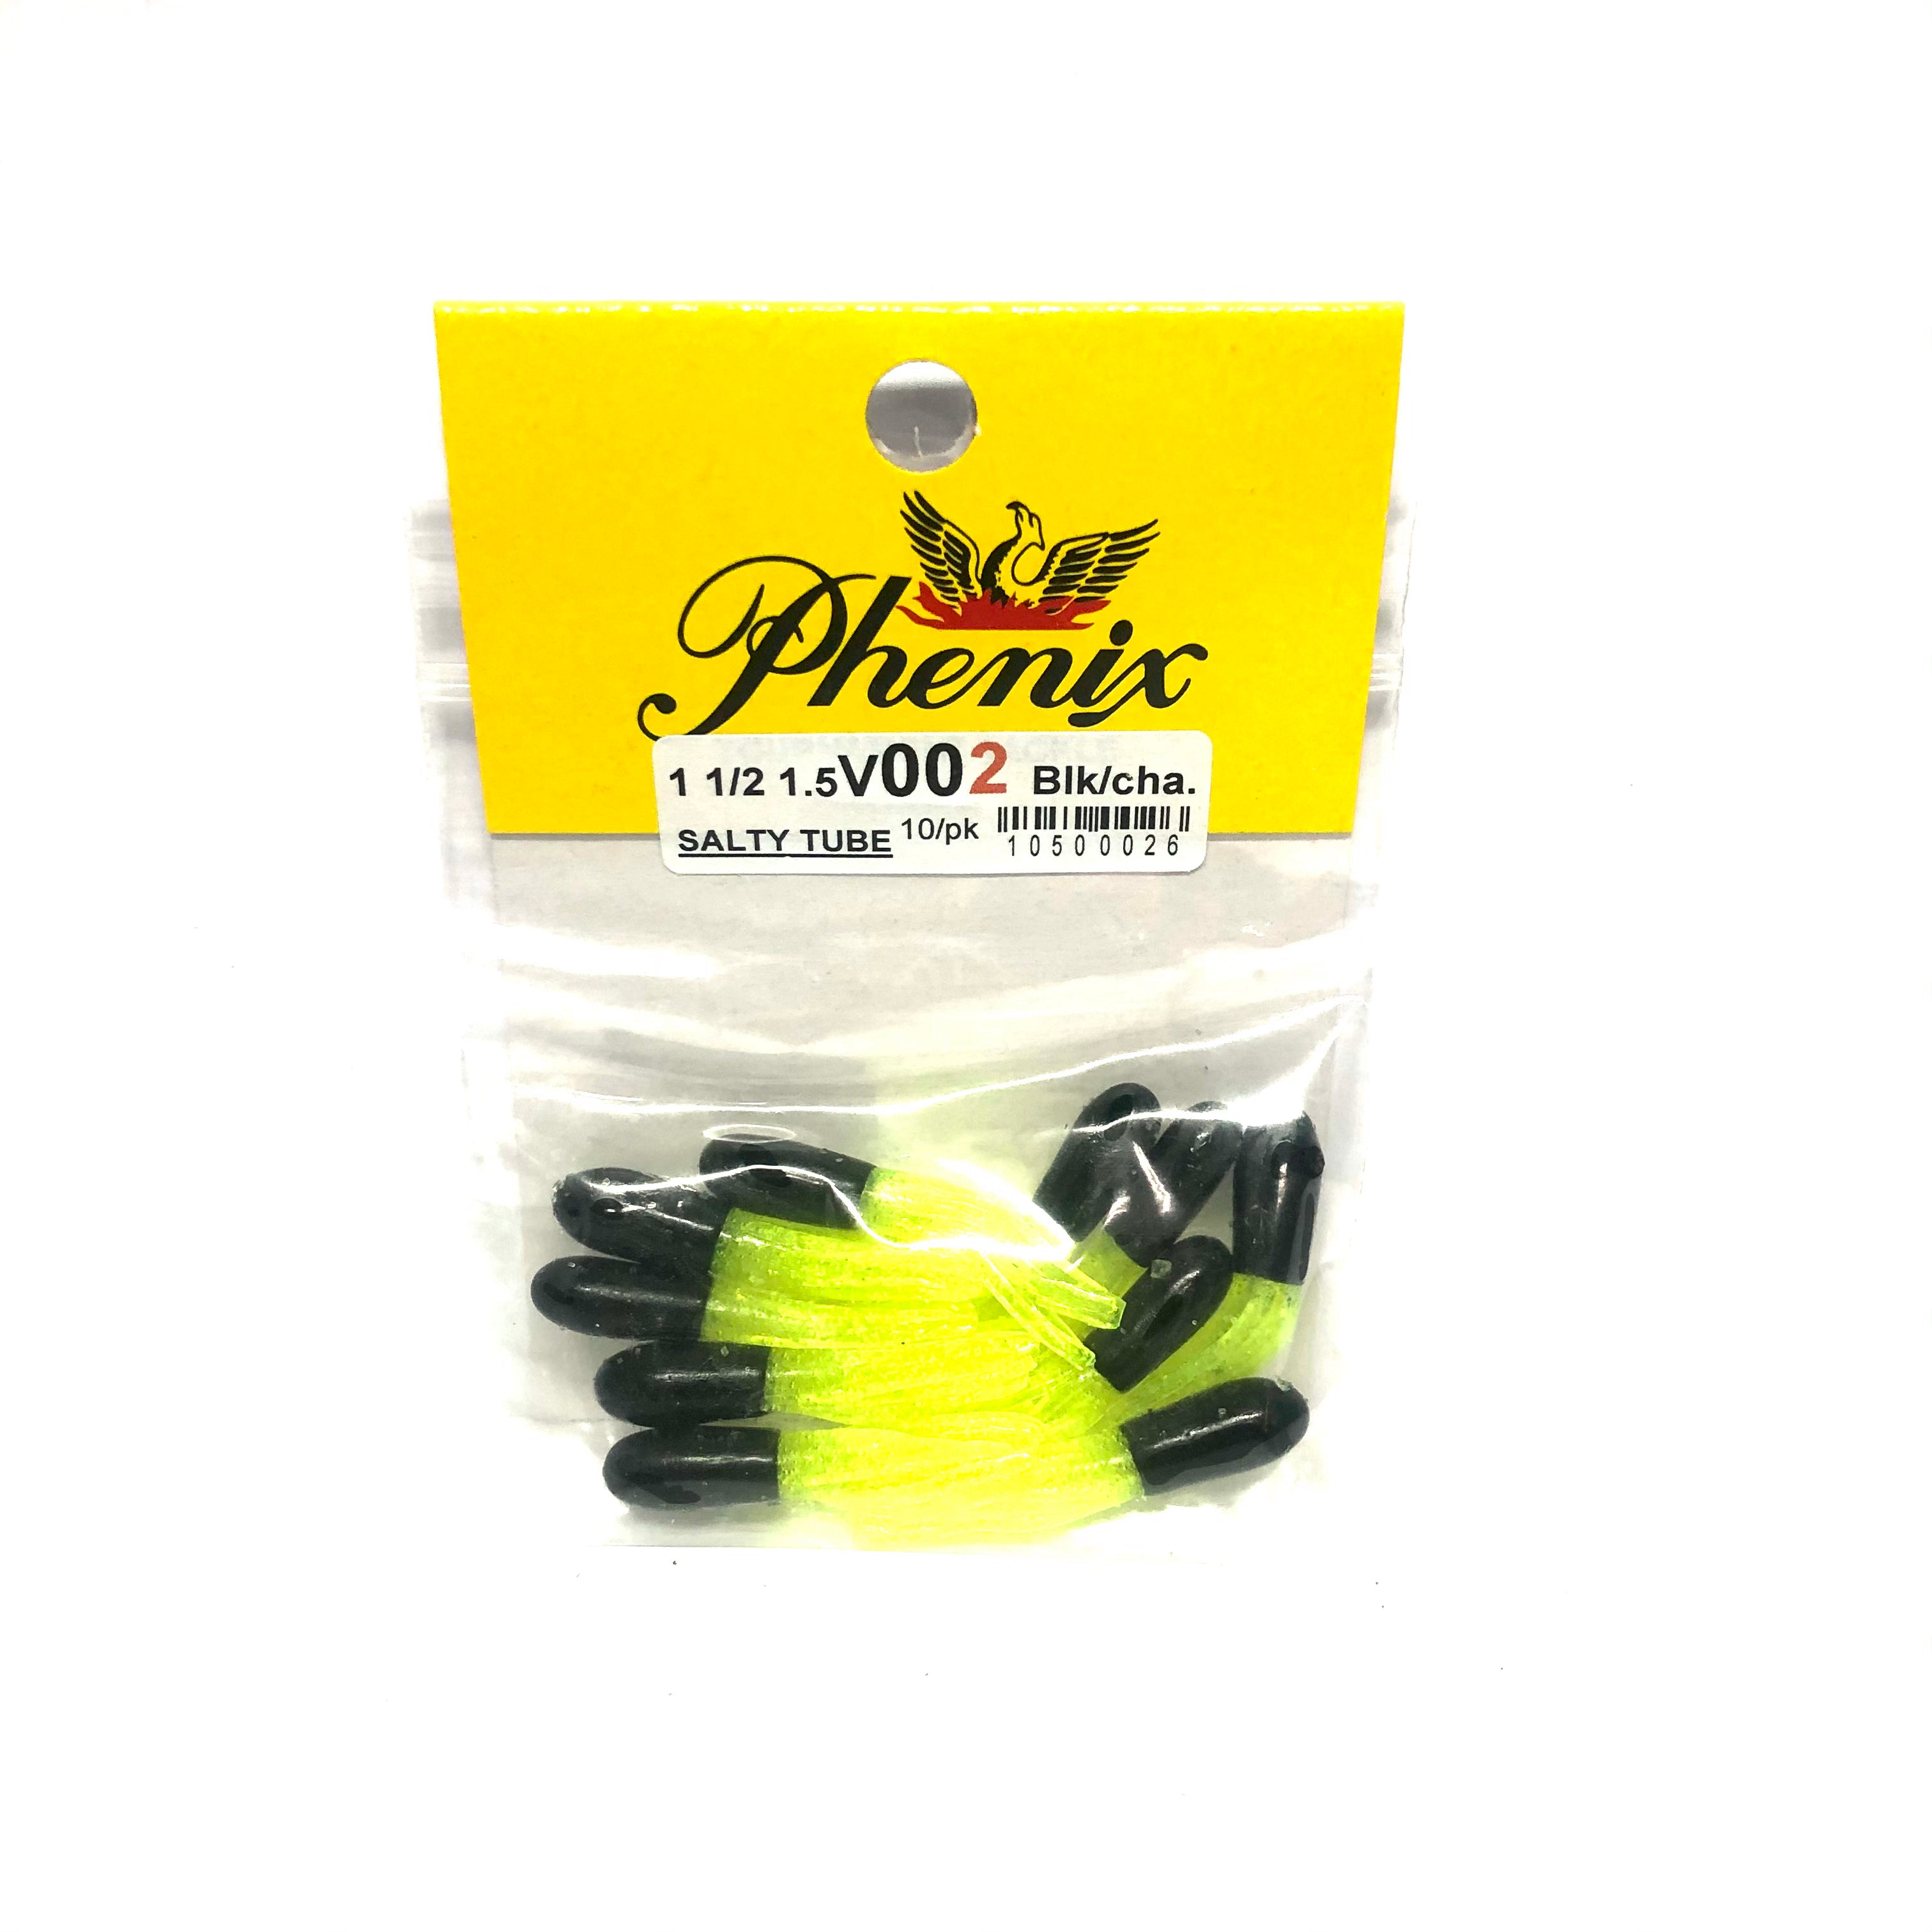 Phenix Salty Tube 1.5